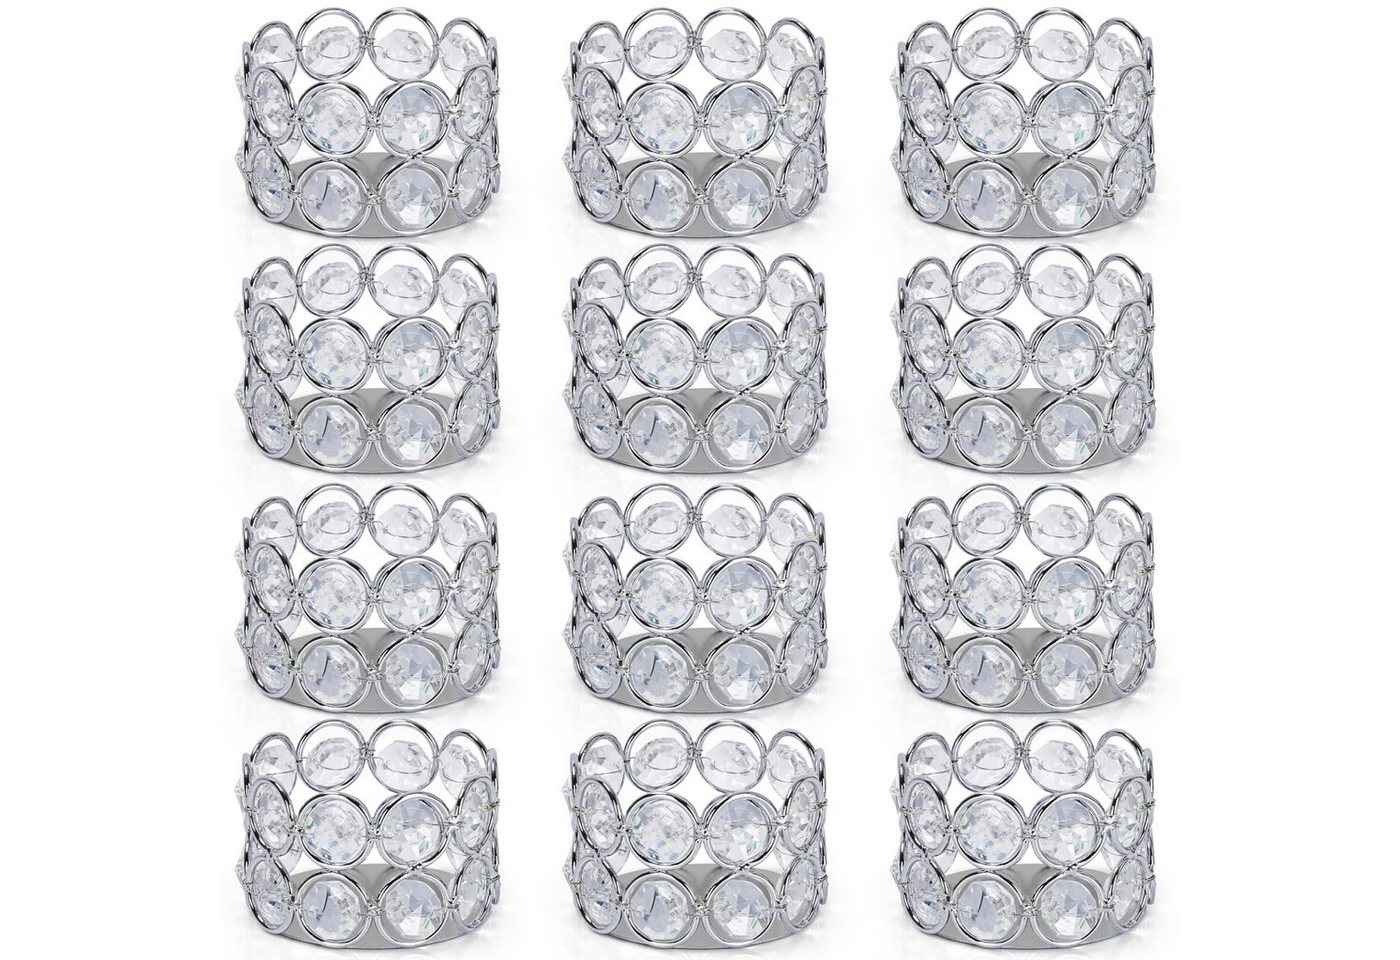 Belle Vous Dekoobjekt Kristall Kerzenständer Set (12 Stück) - Glas Teelichthalter, Silber Kristall Kerzenständer (12 Stk) - Teelichthalter Glas von Belle Vous